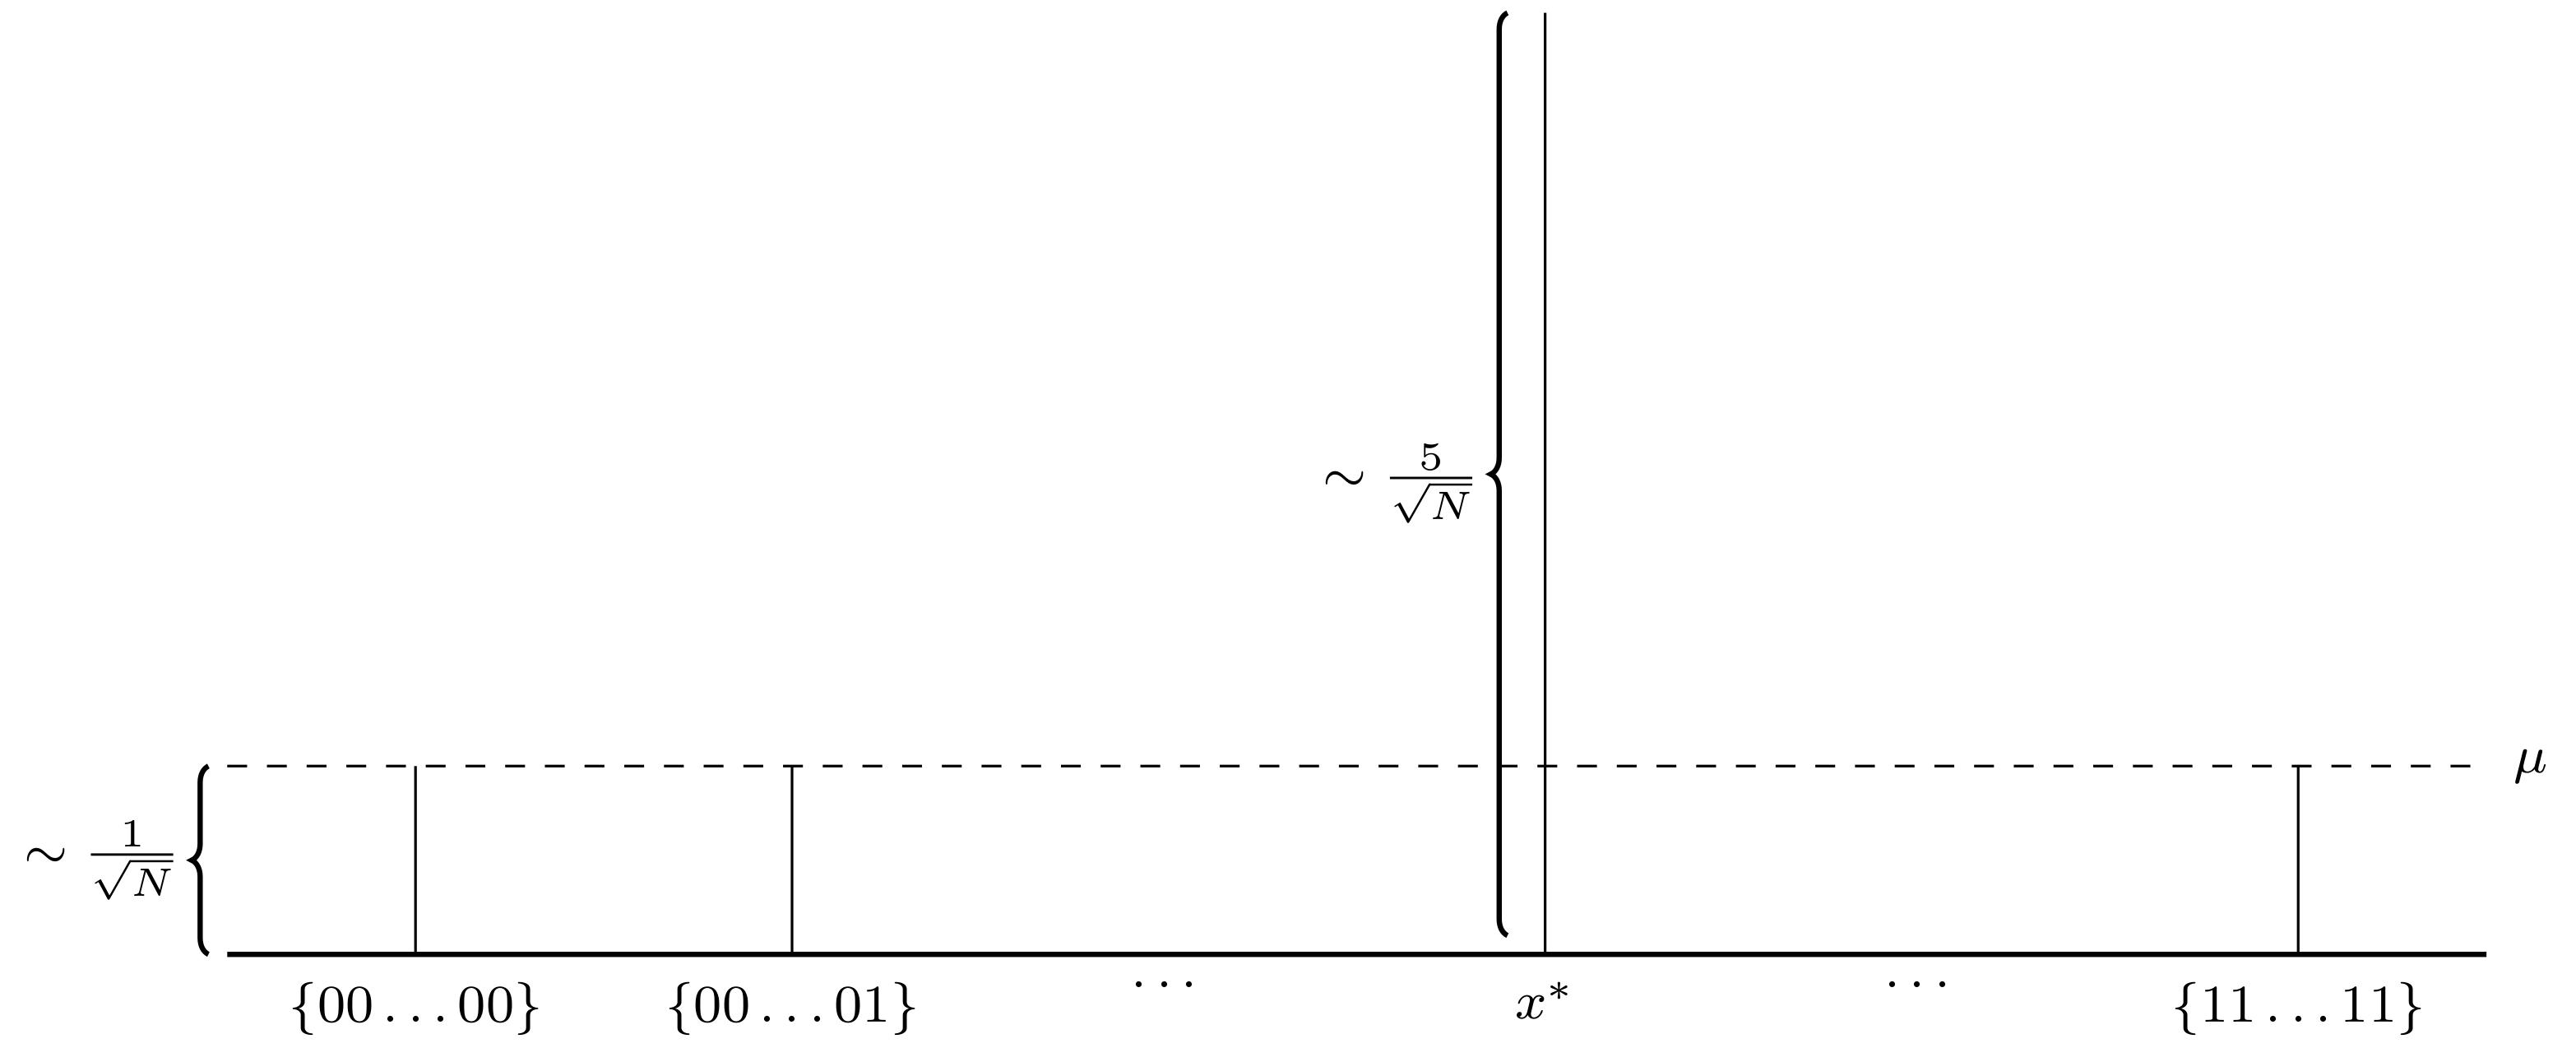 Phase Amplitudes After Inversion About Mean ($\boldsymbol{\alpha}_{t=1}^{\prime}$)